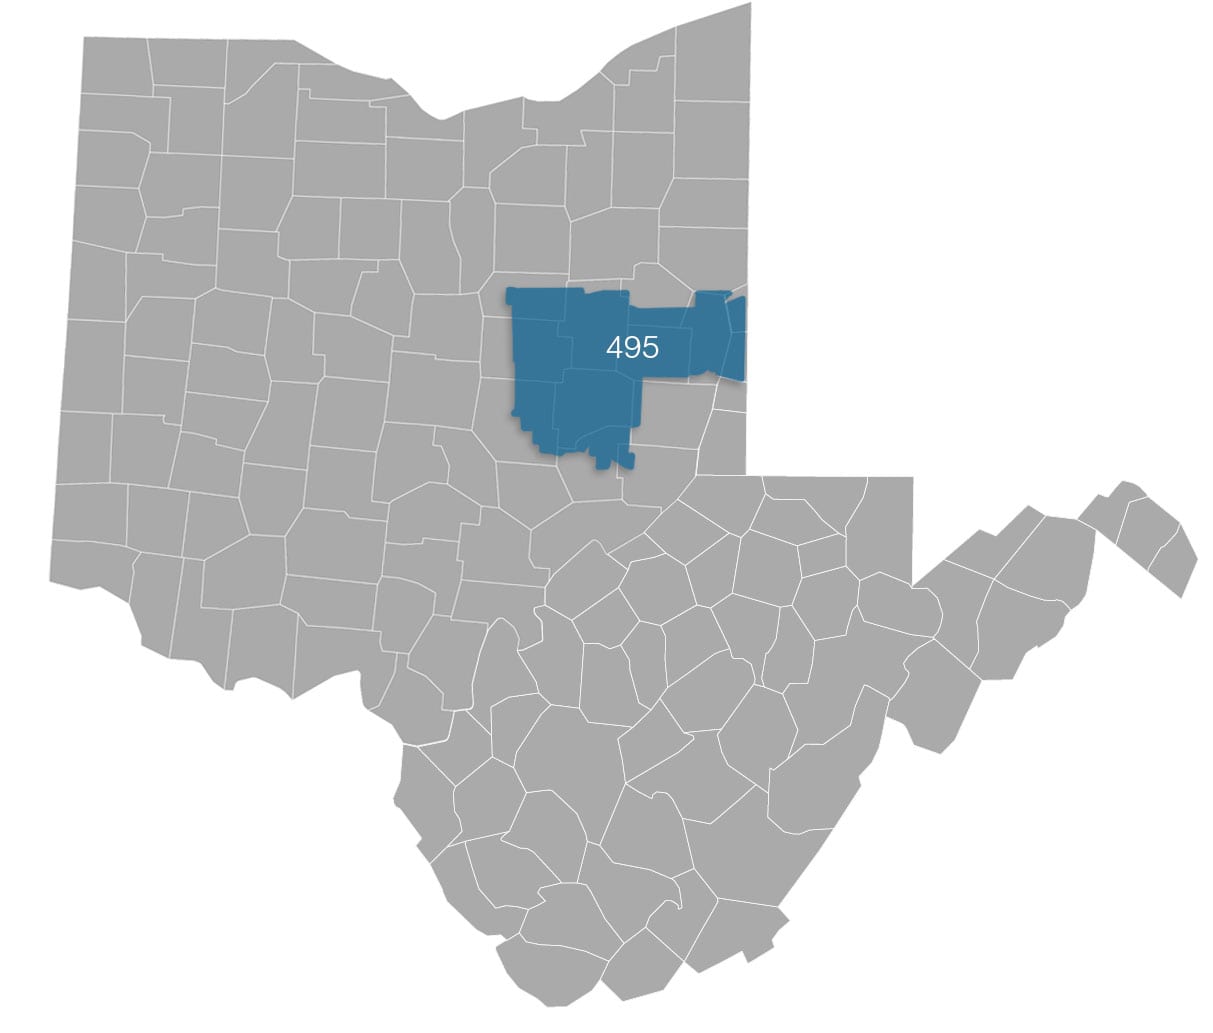 West Virginia & Ohio counties